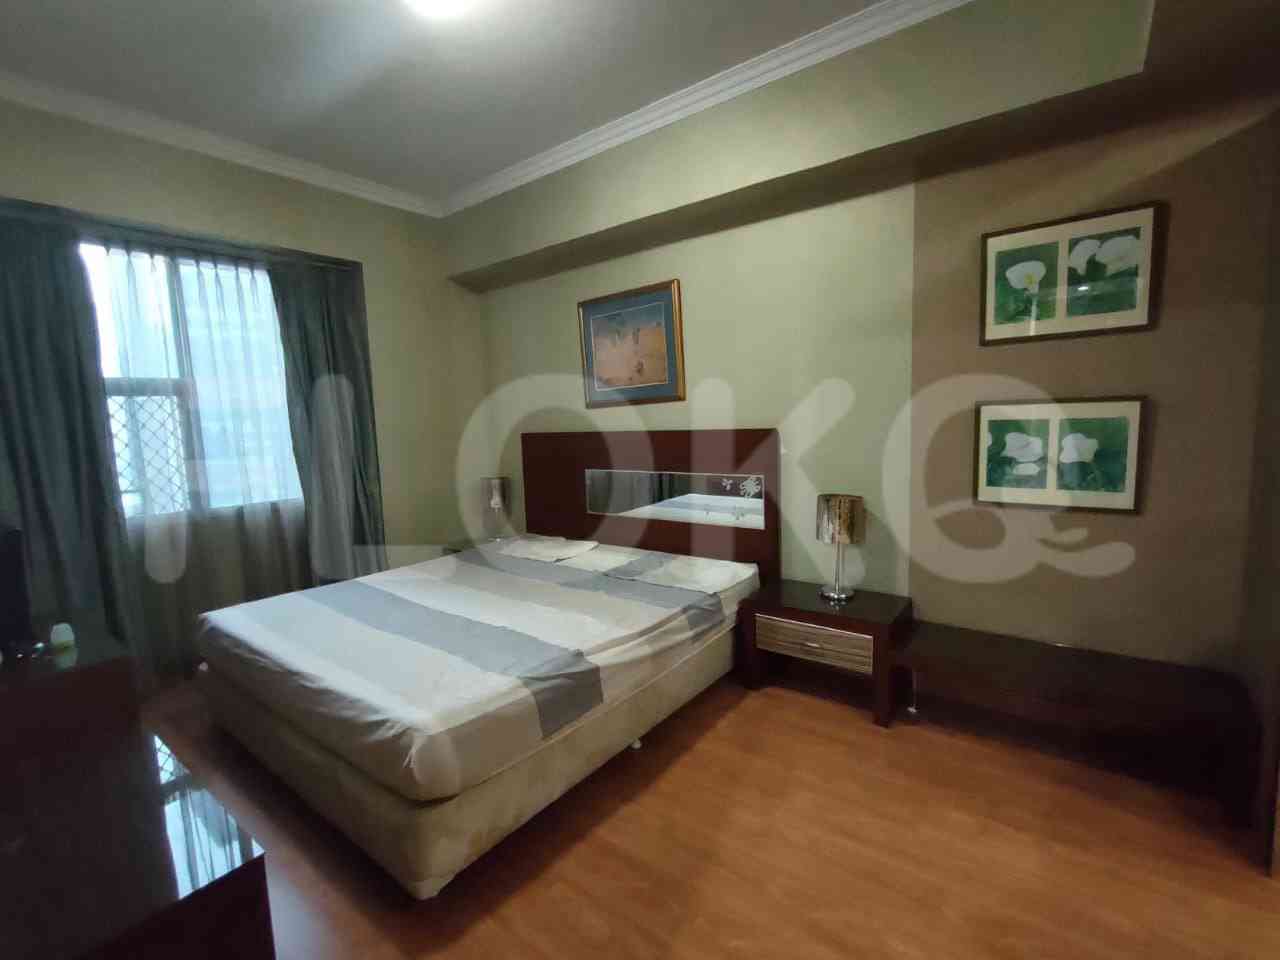 2 Bedroom on 21st Floor for Rent in Aryaduta Suites Semanggi - fsu916 3